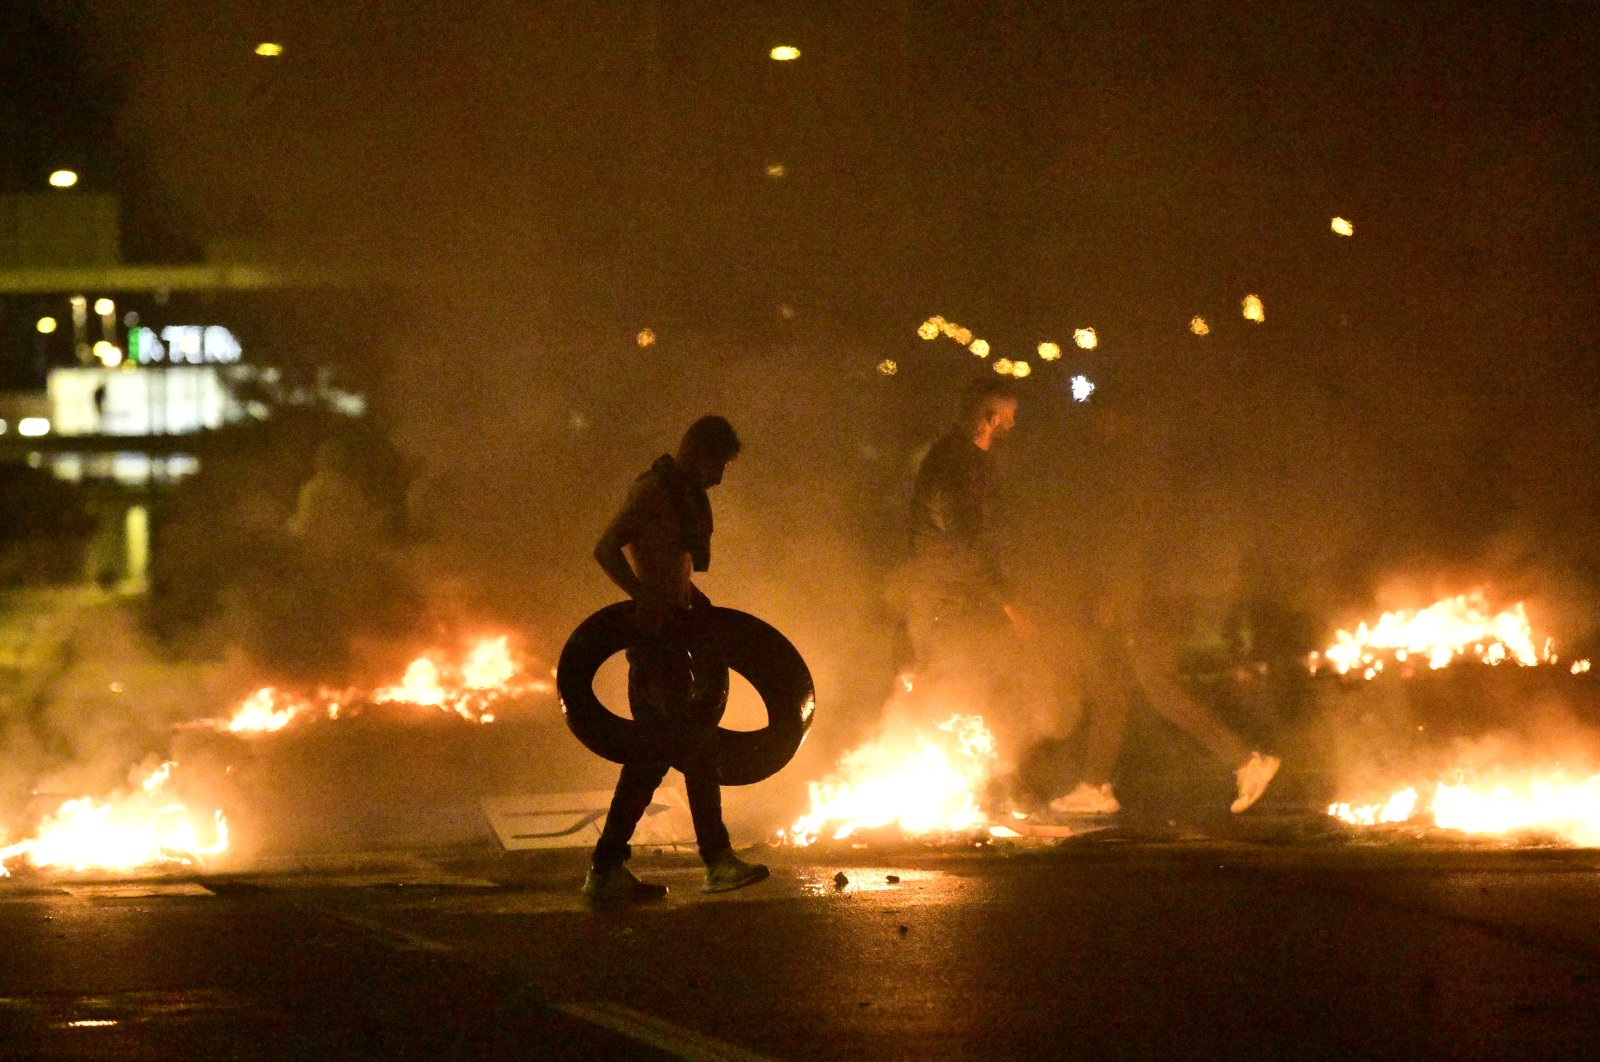 Demonstrators burn tires as protesters riot in the Rosengard neighborhood of Malmo, Sweden, Aug. 28, 2020. (EPA Photo)